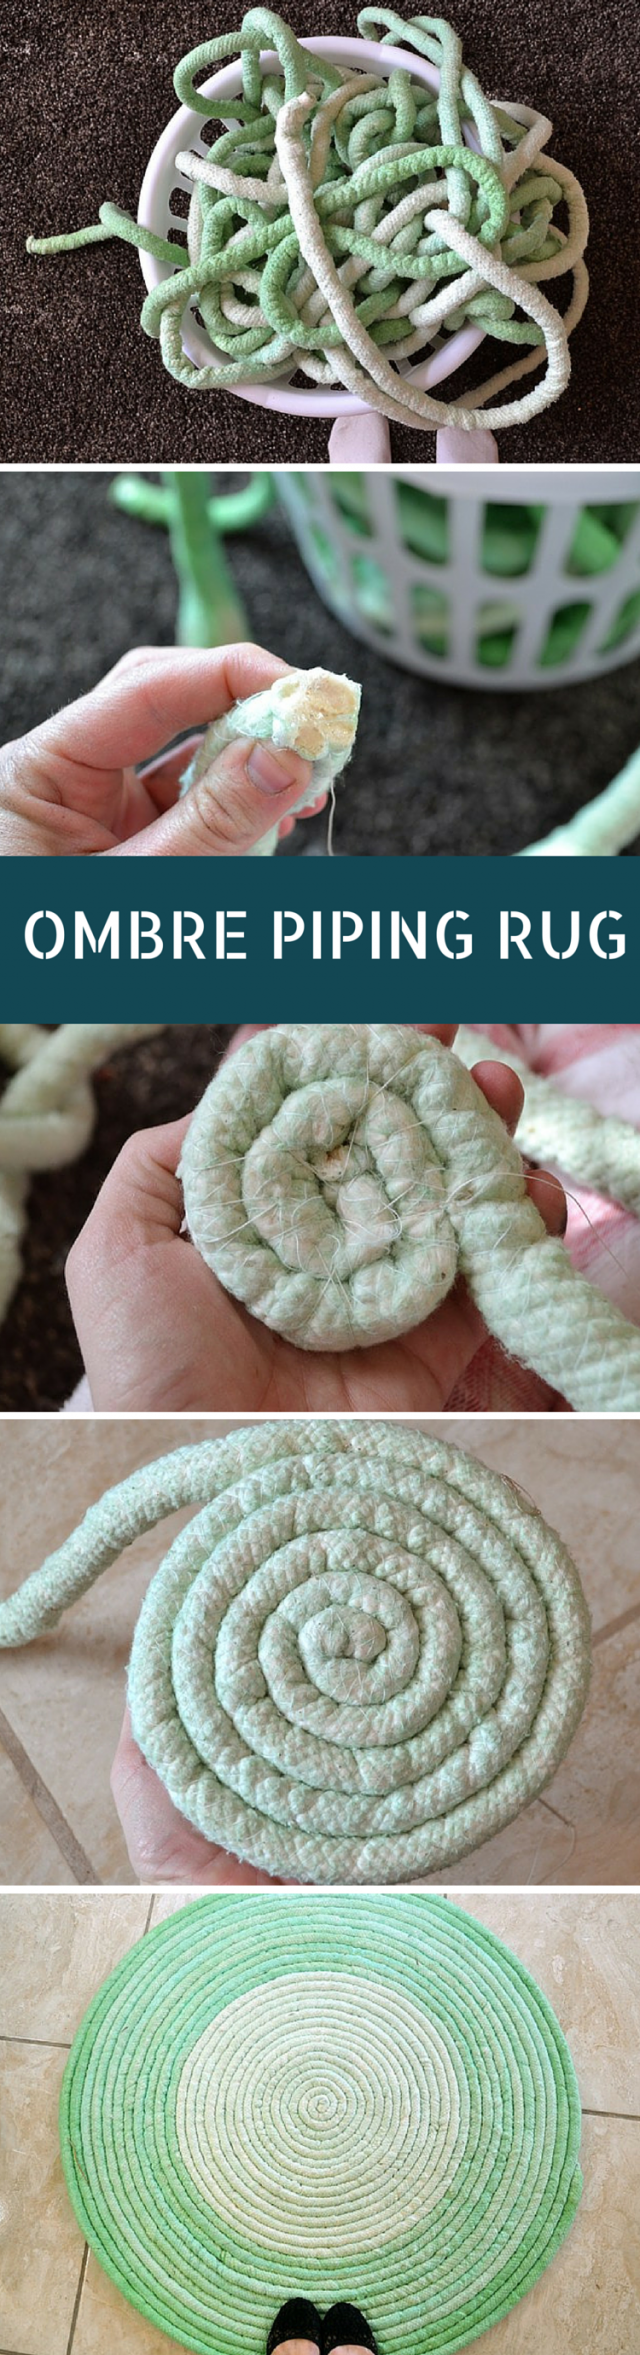 DIY Ombre Cotton Piping Rug